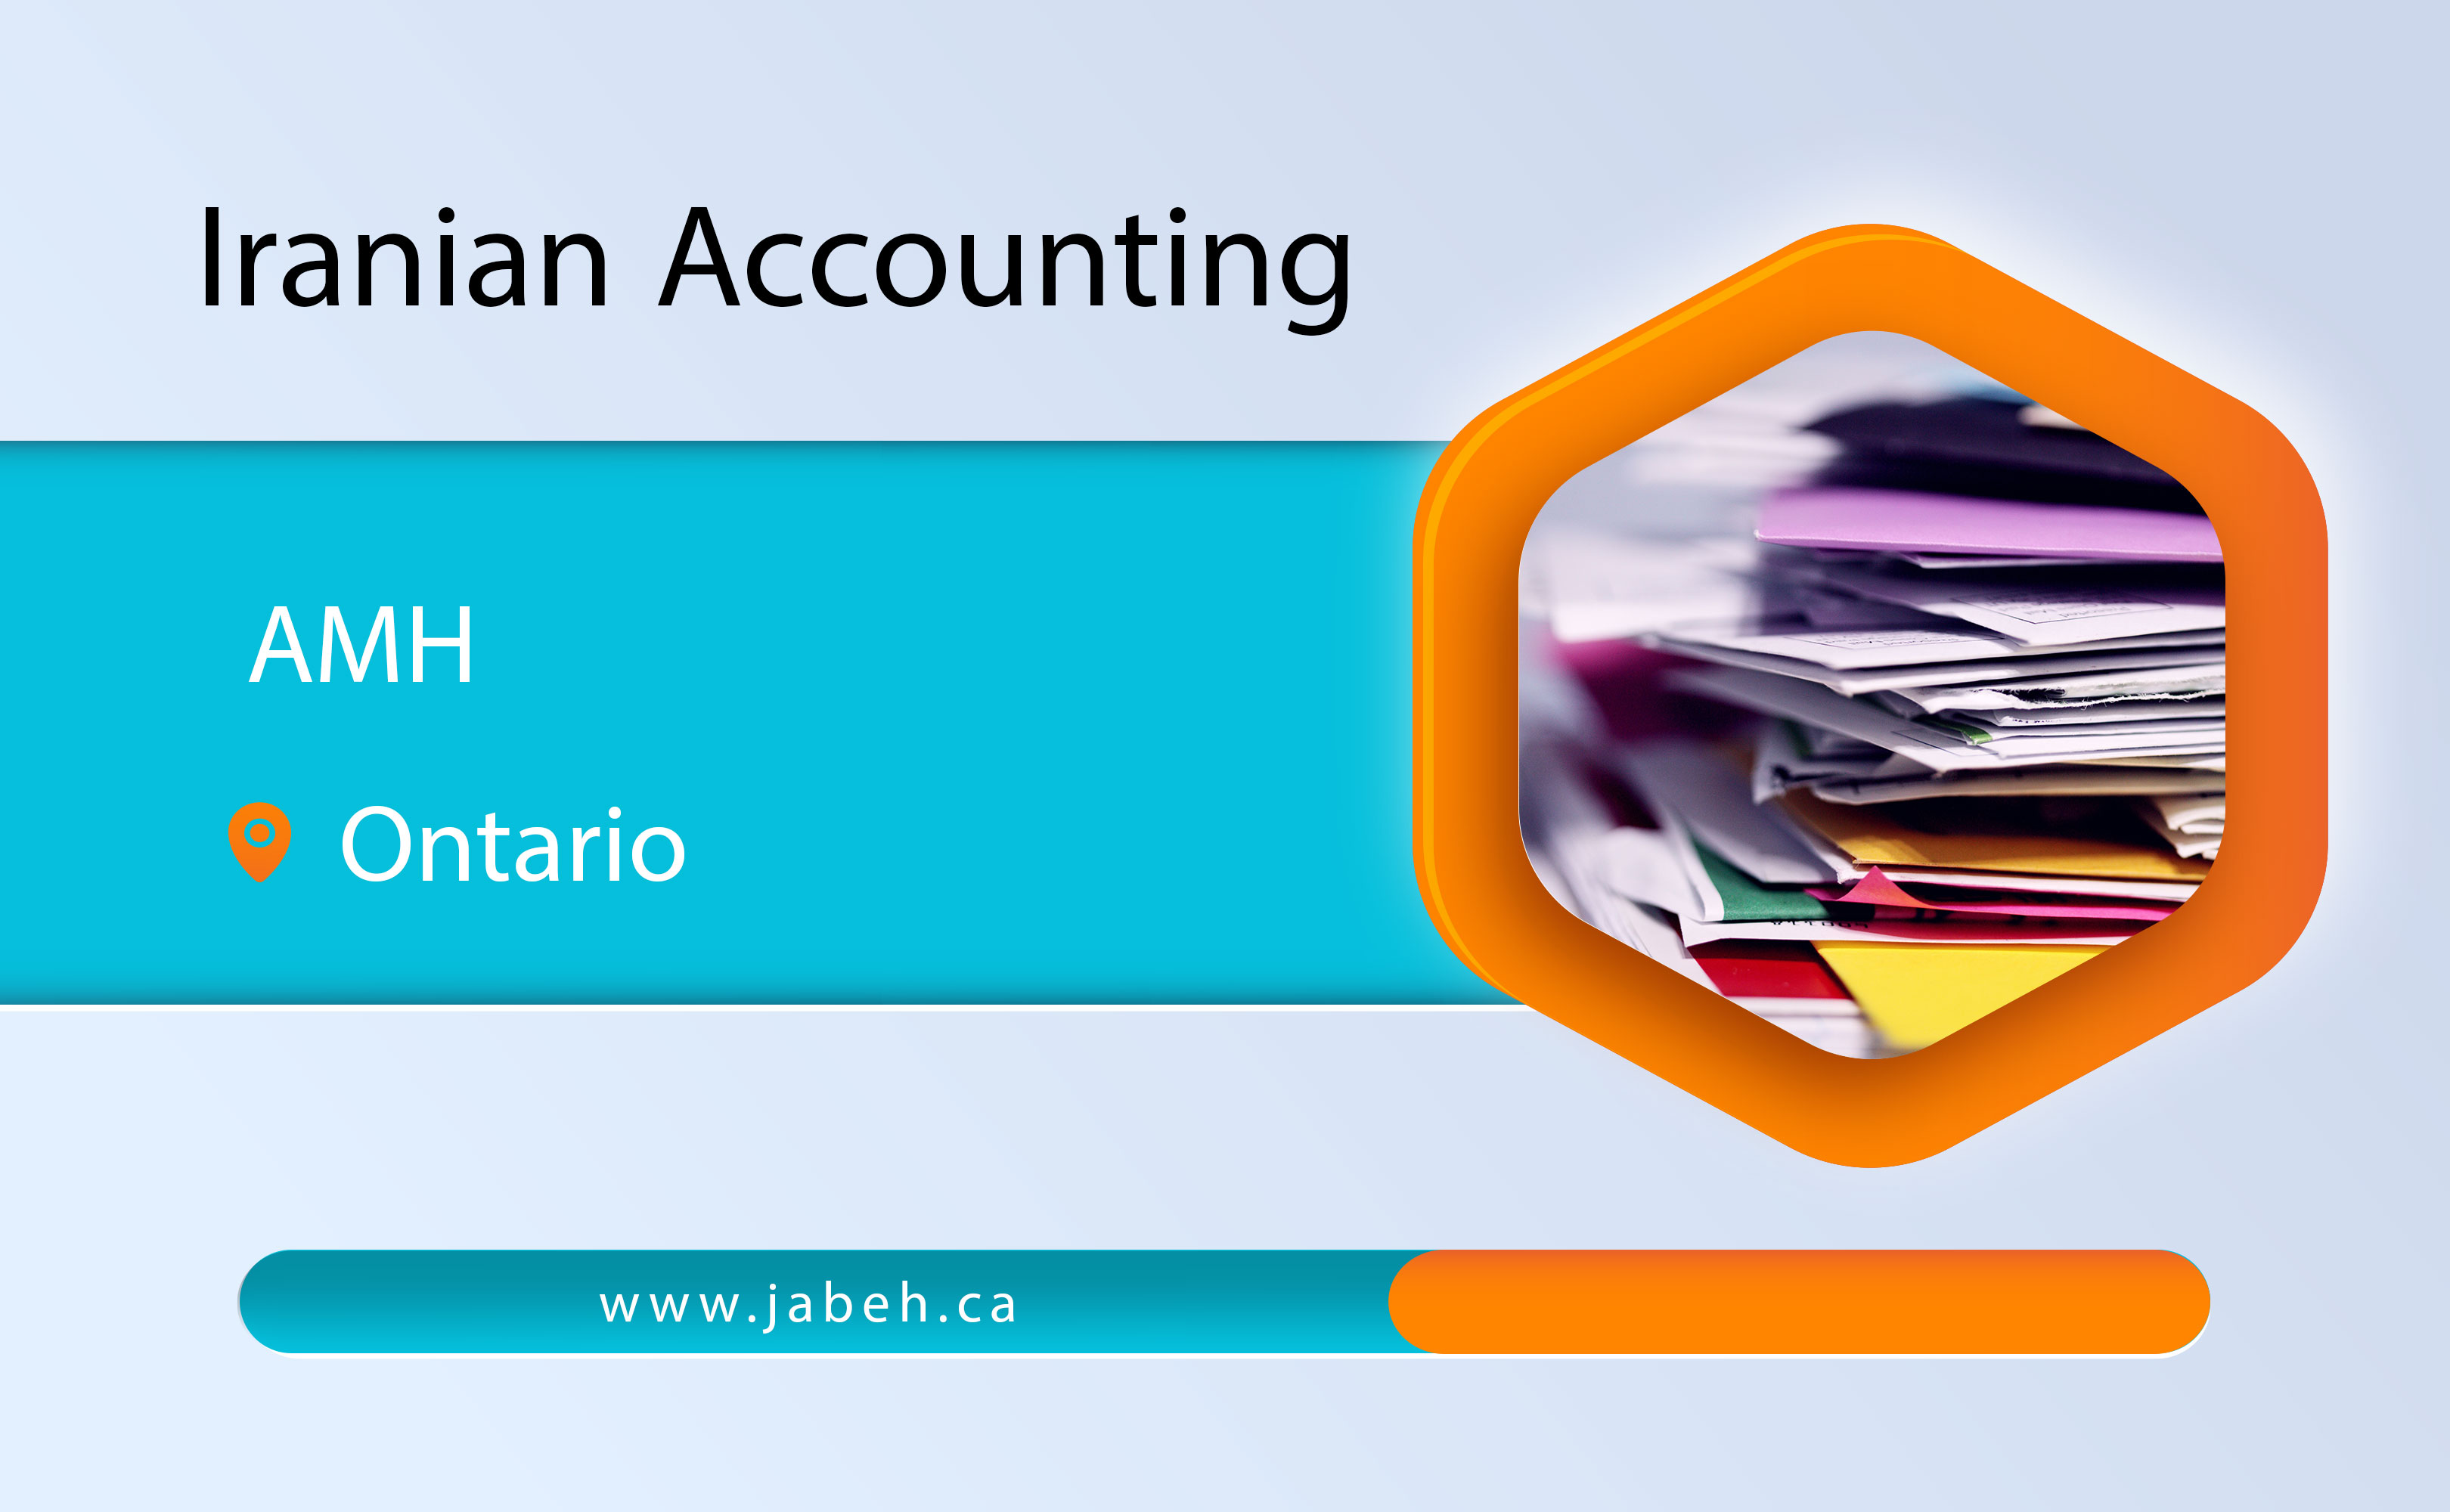 AMH Iranian accounting company in Ontario